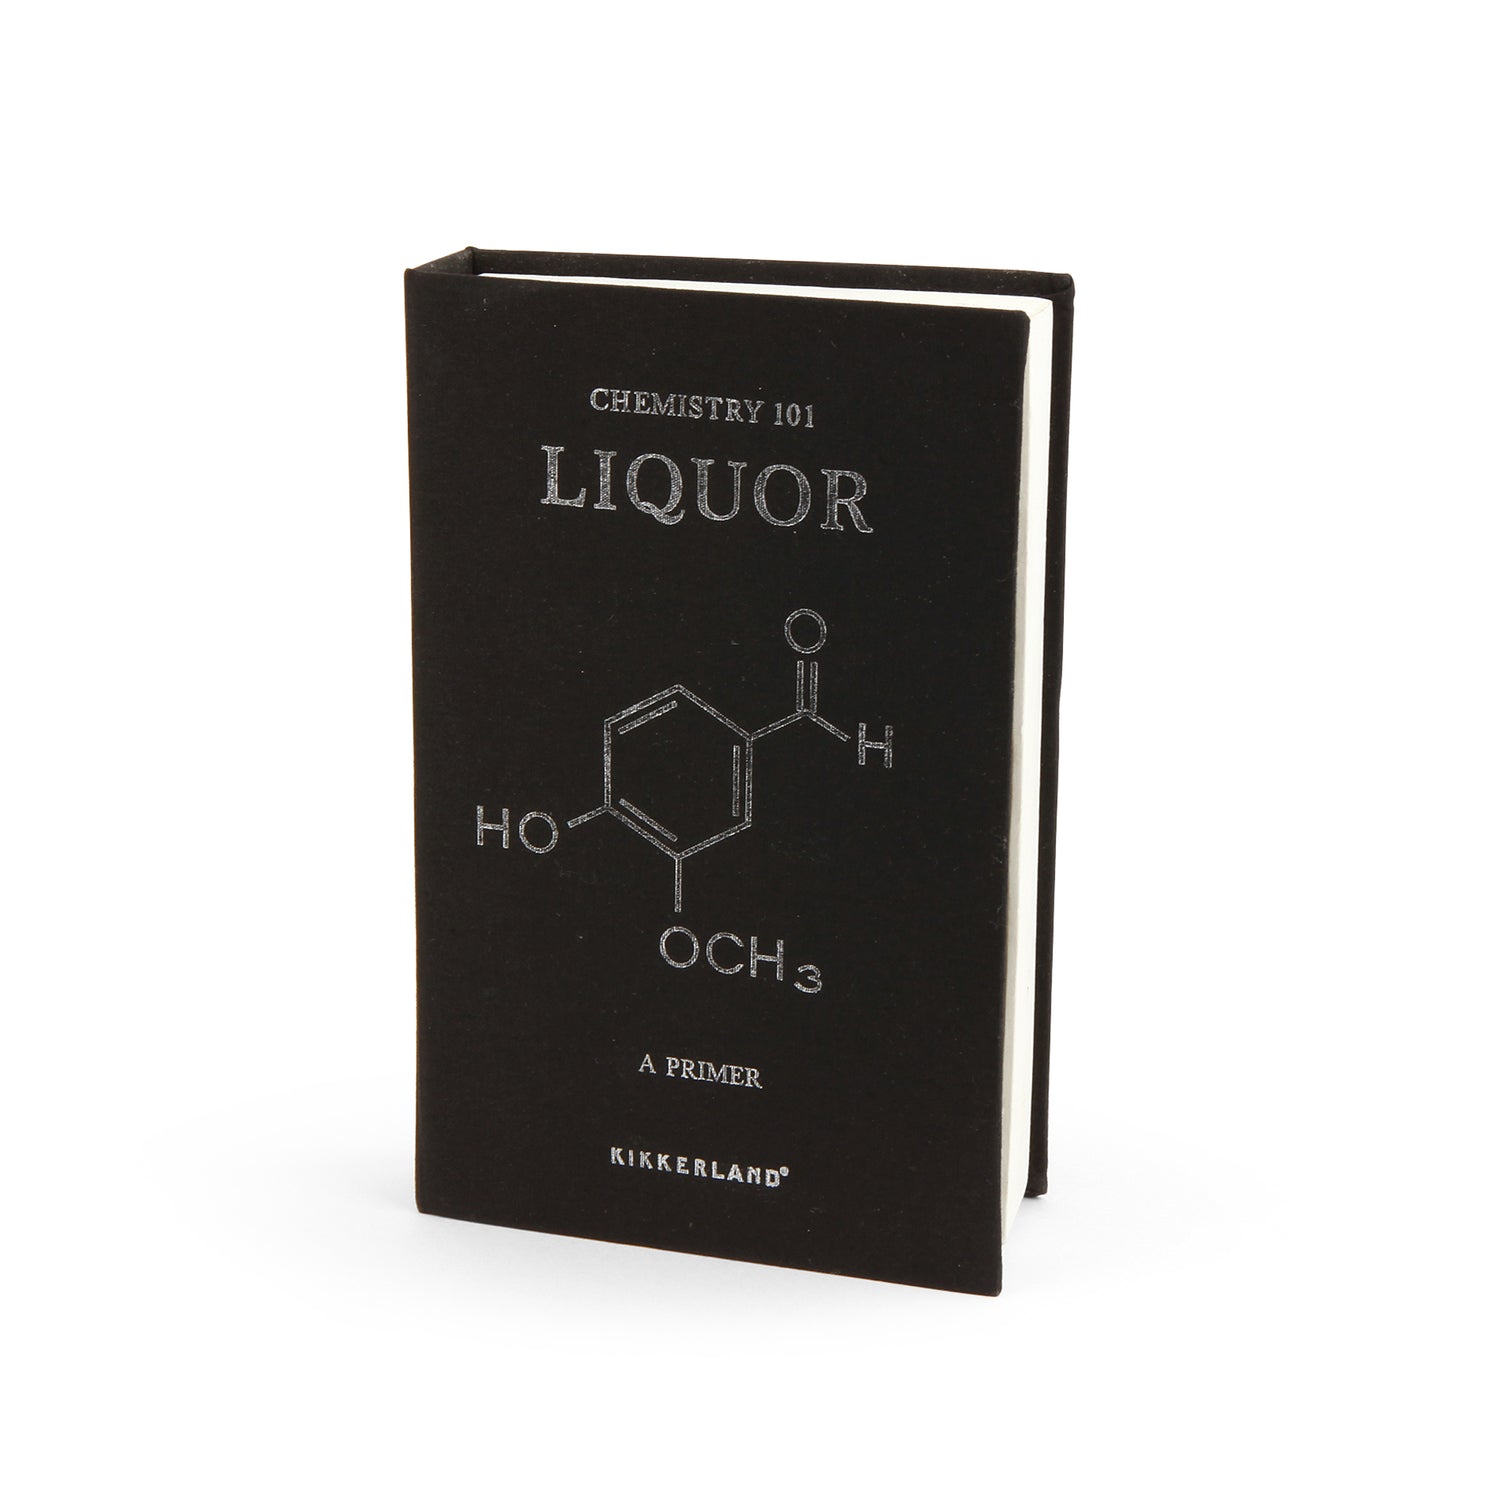 Chemistry 101 Flask book